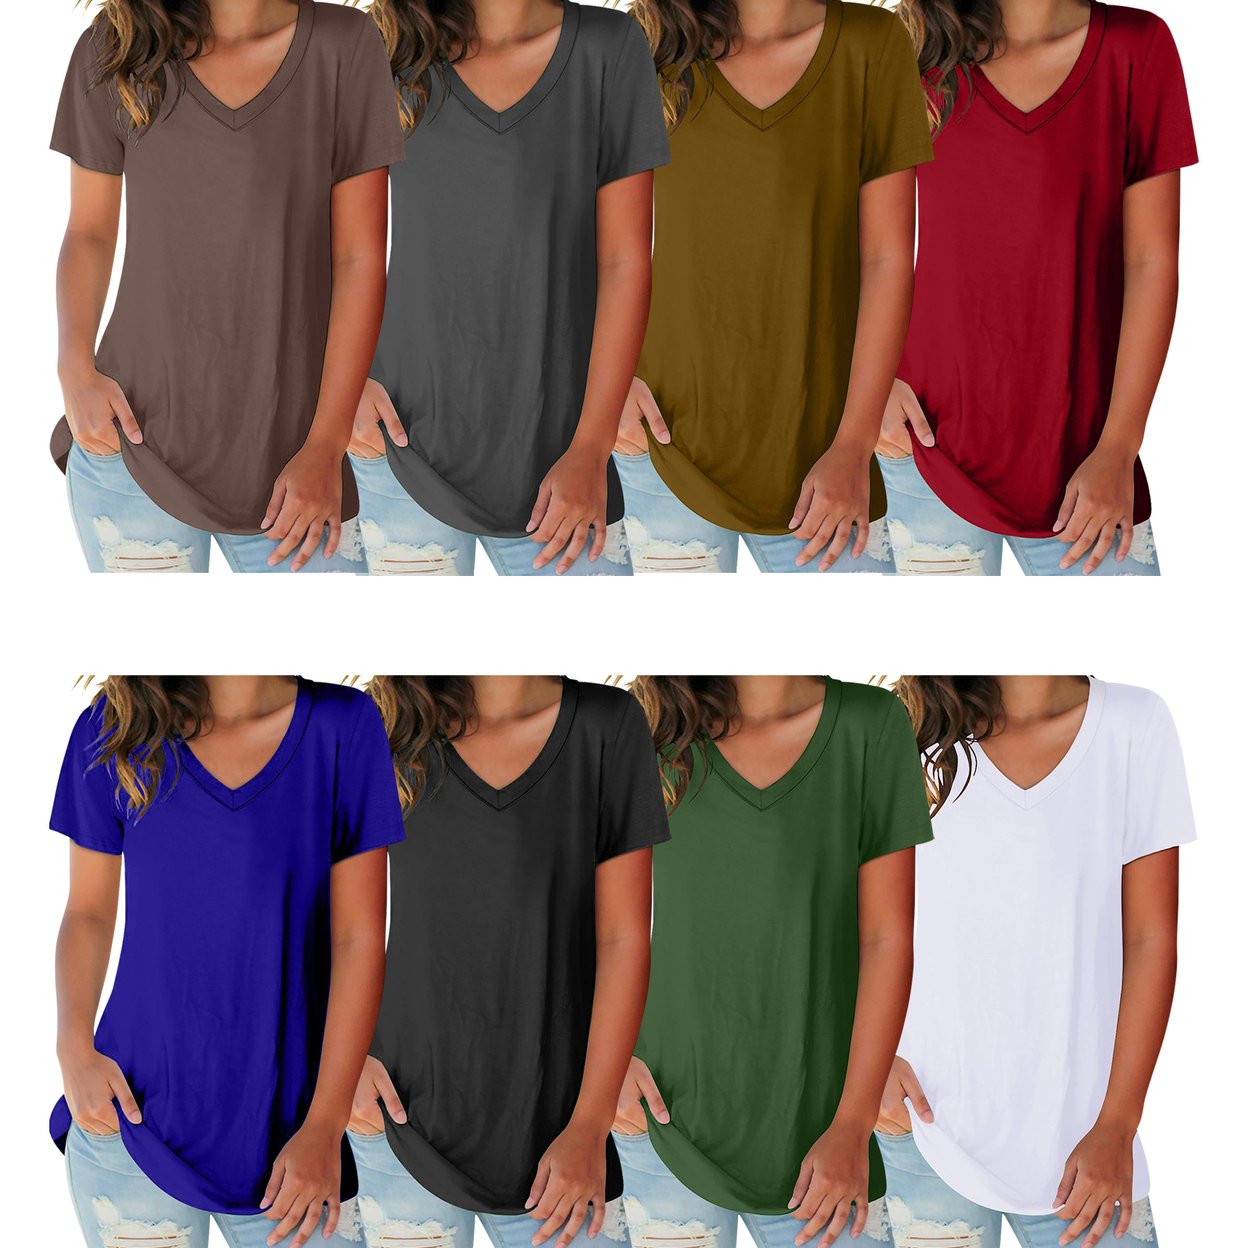 2-Pack: Women's Ultra Soft Smooth Cotton Blend Basic V-Neck Short Sleeve Shirts - Black & Brown, Xx-large